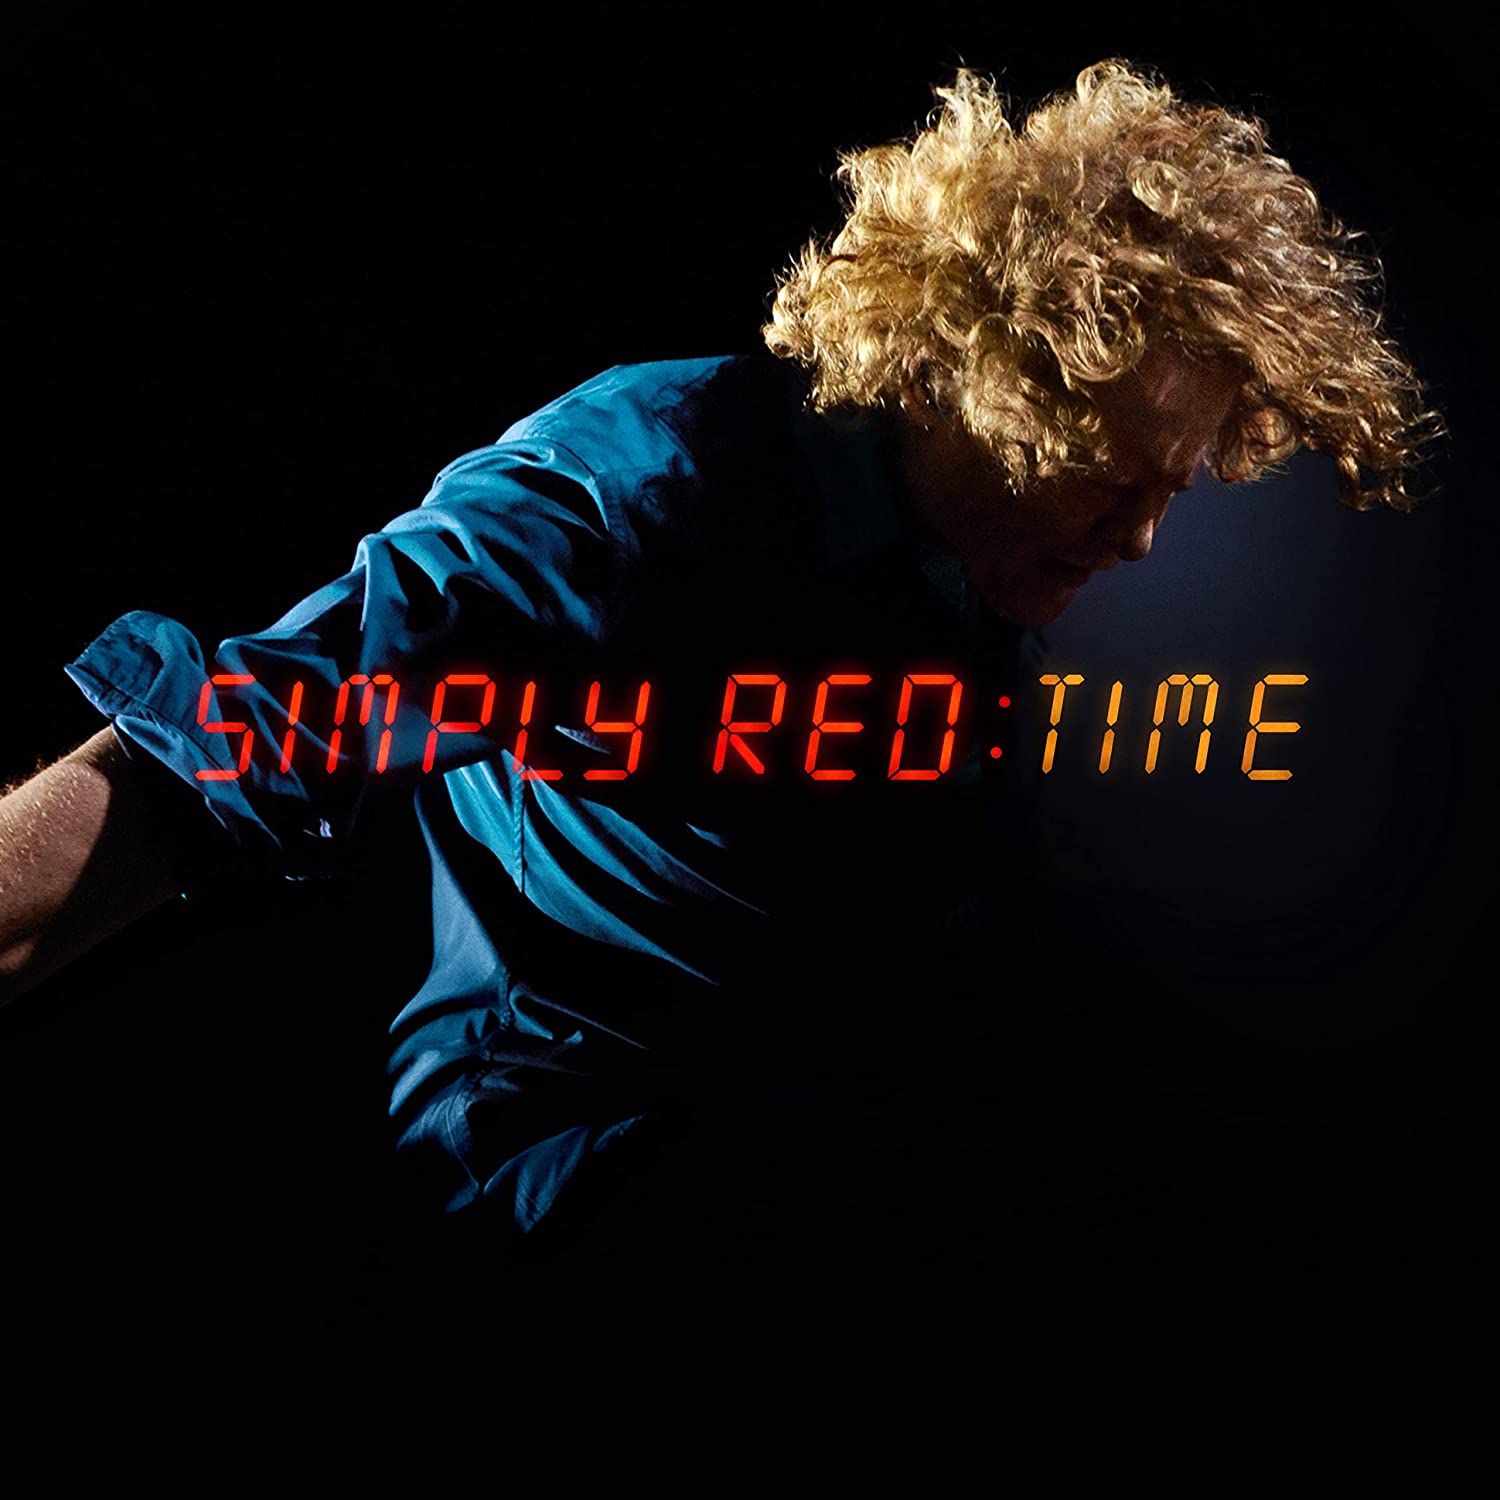 Copertina Vinile 33 giri Time di Simply Red